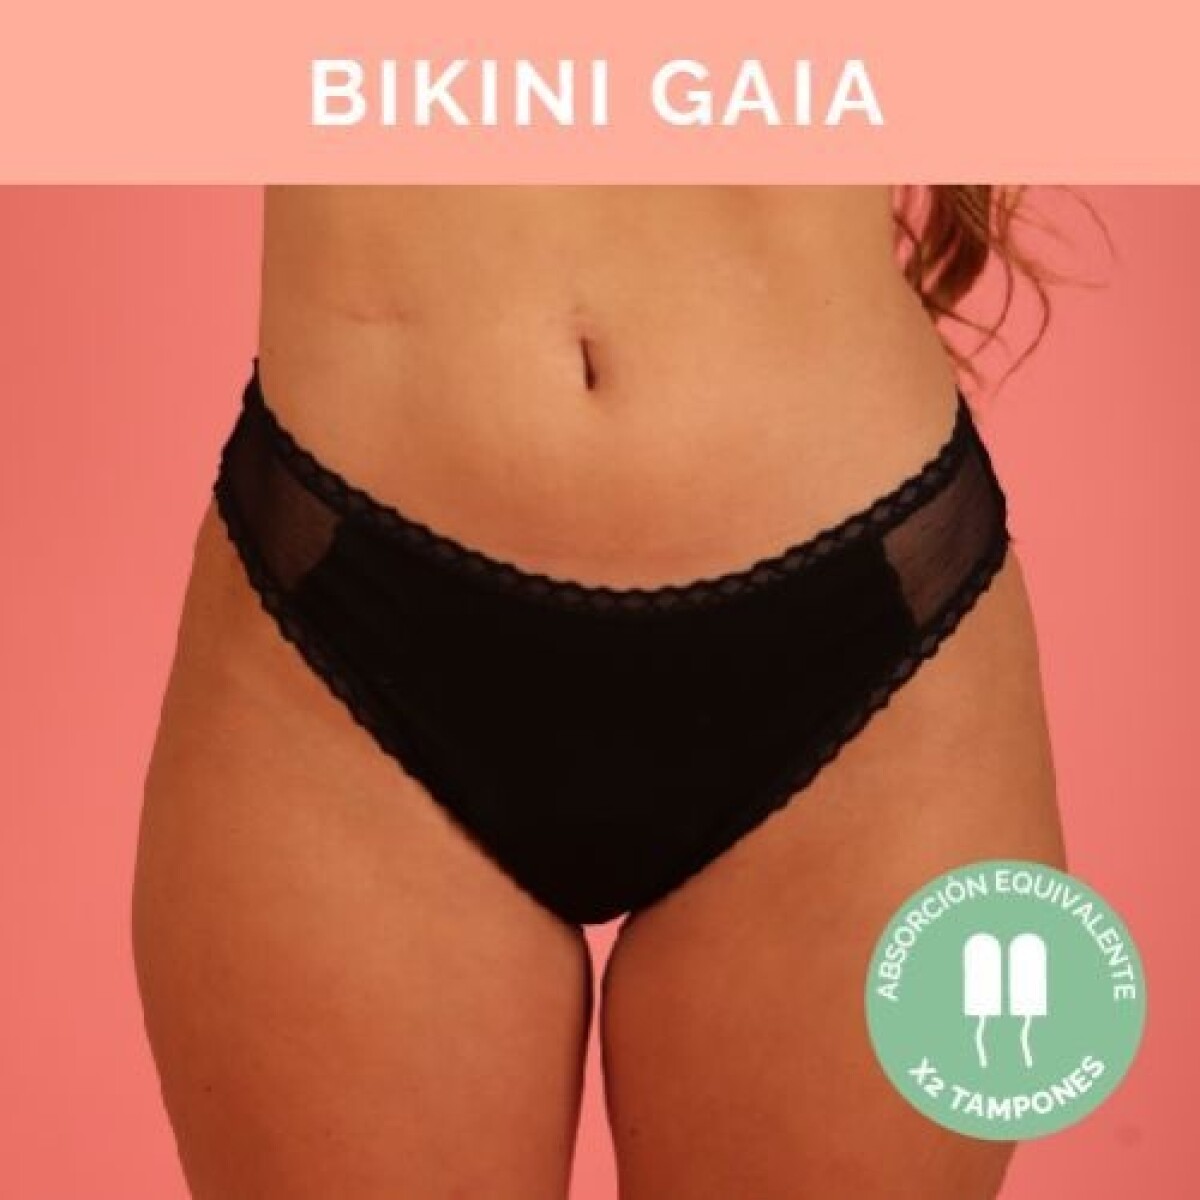 Bombacha Menstrual Bikini Gaia Puntilla Talle Xl 